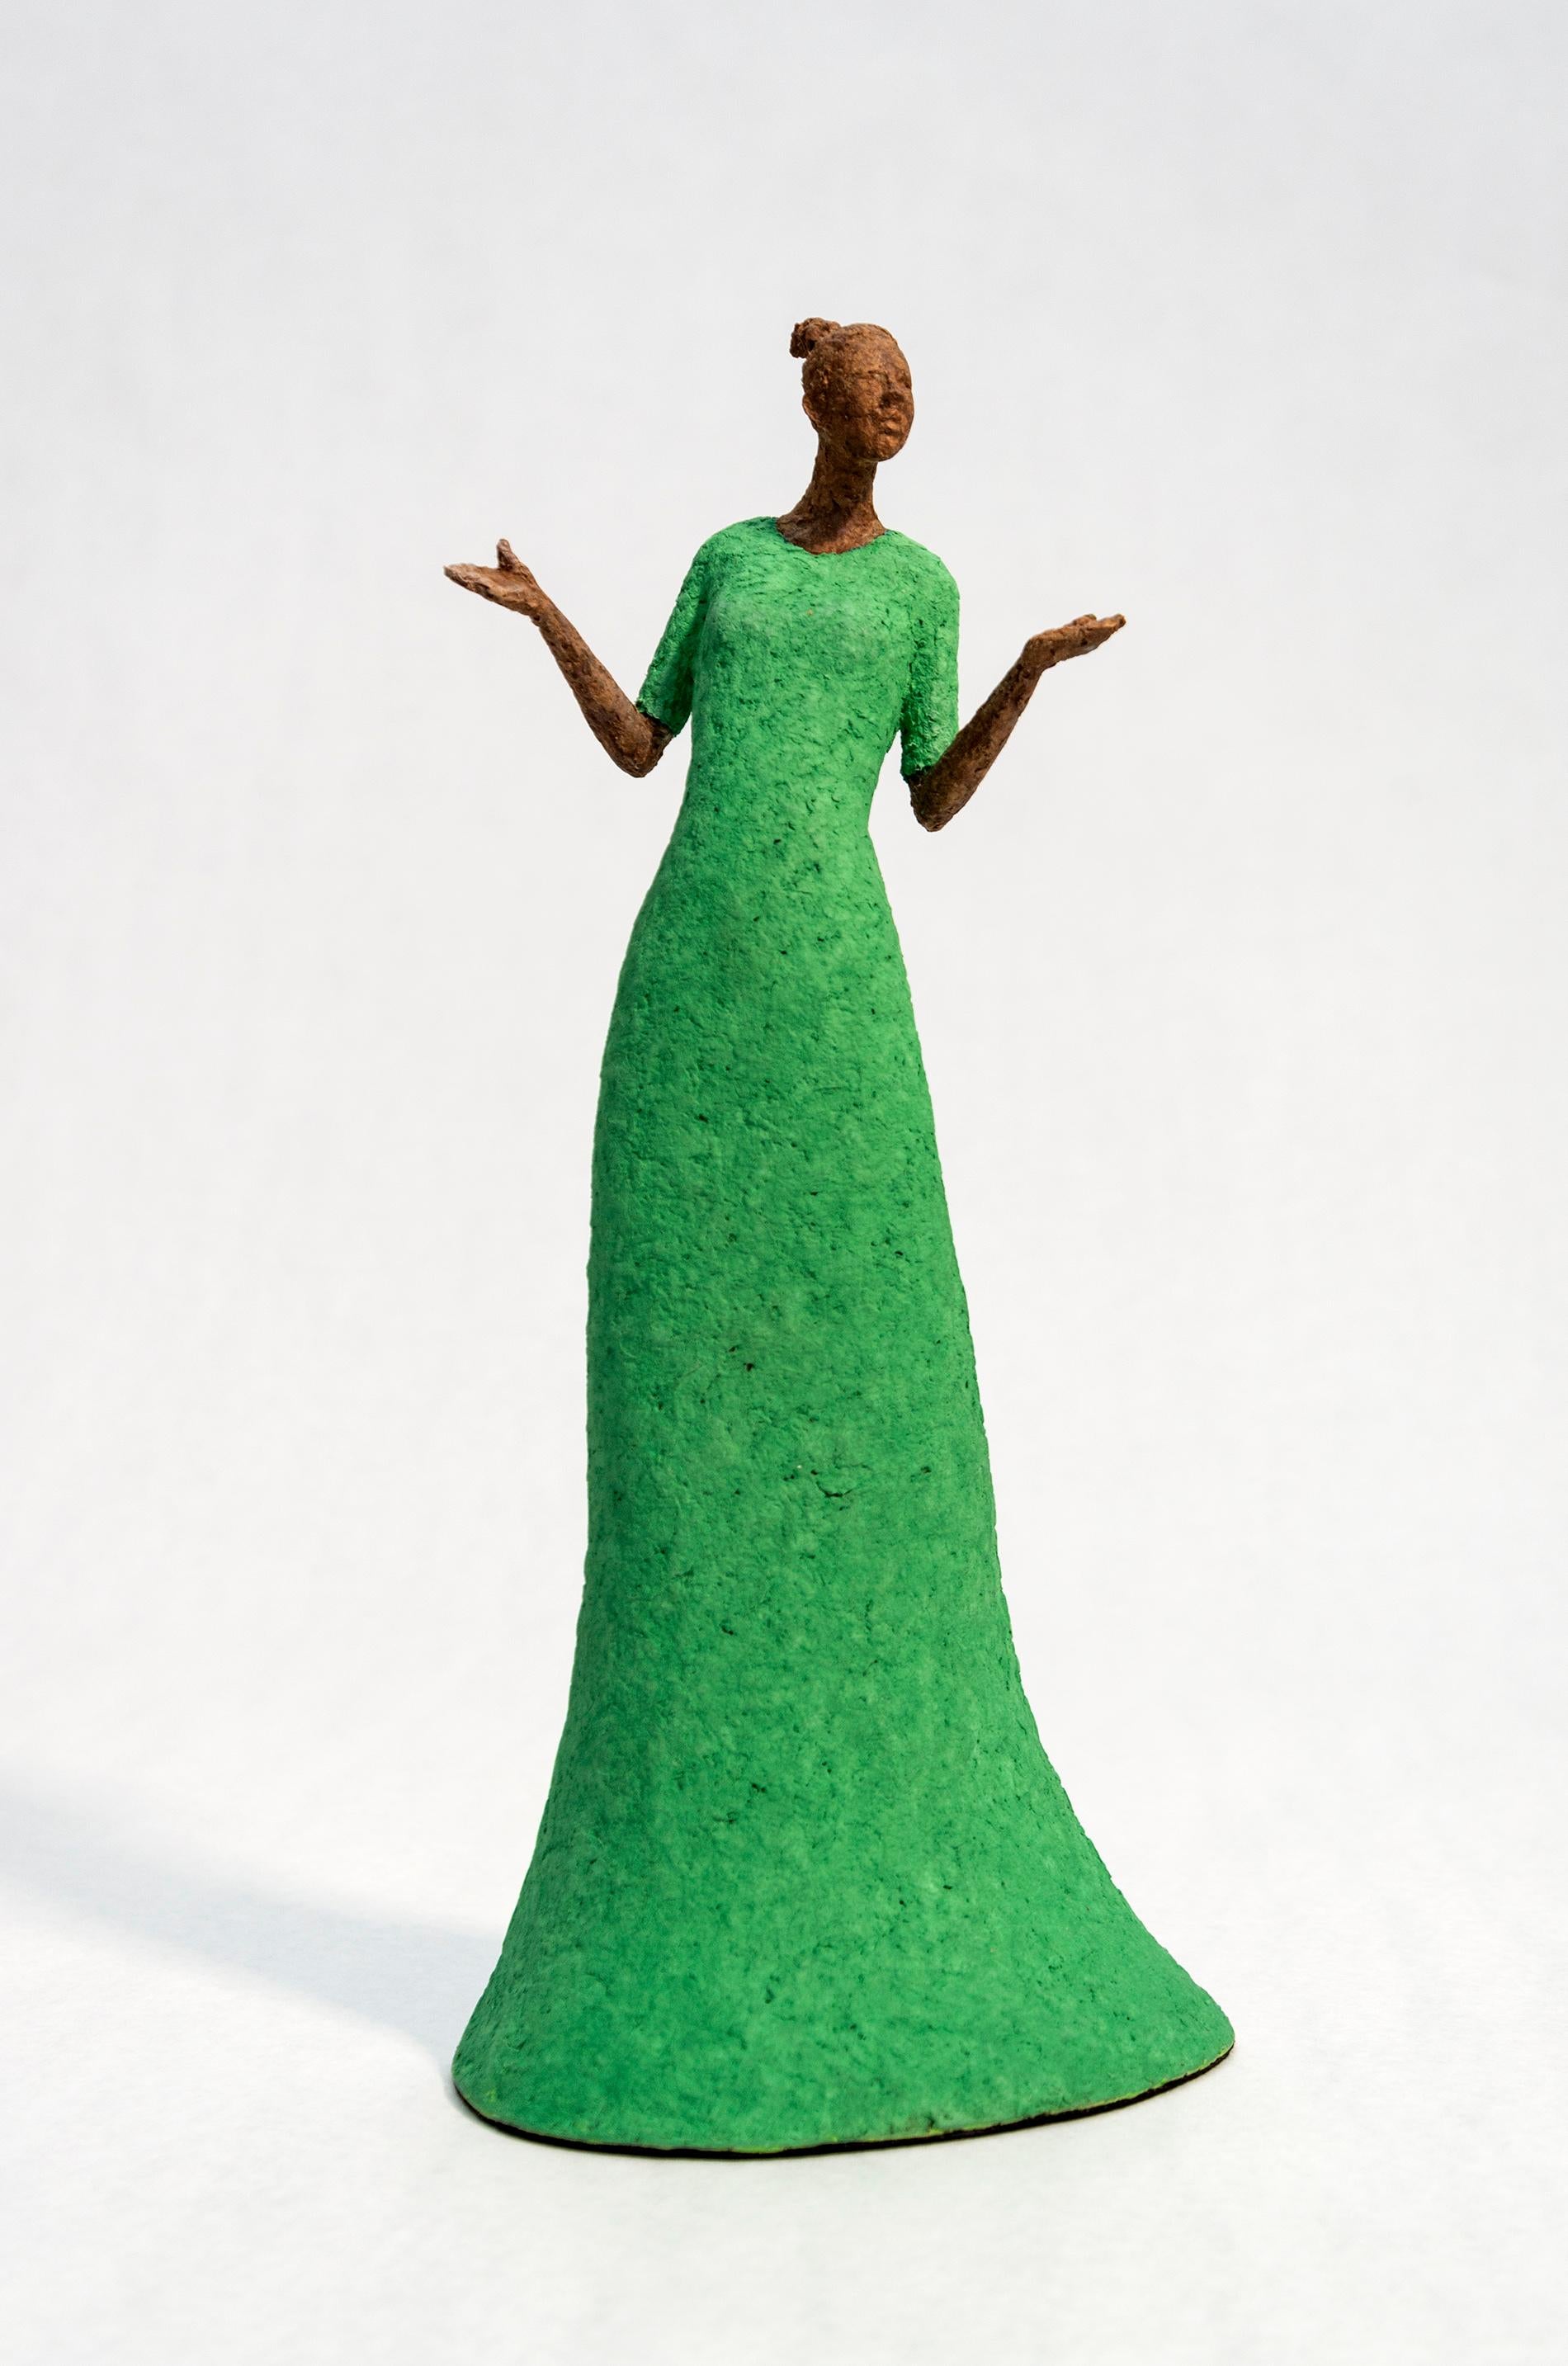 Figurative Sculpture Paul Duval - Bella, lumineuse, expressive, texturée, féminine, figurative, sculpture en papier mâché